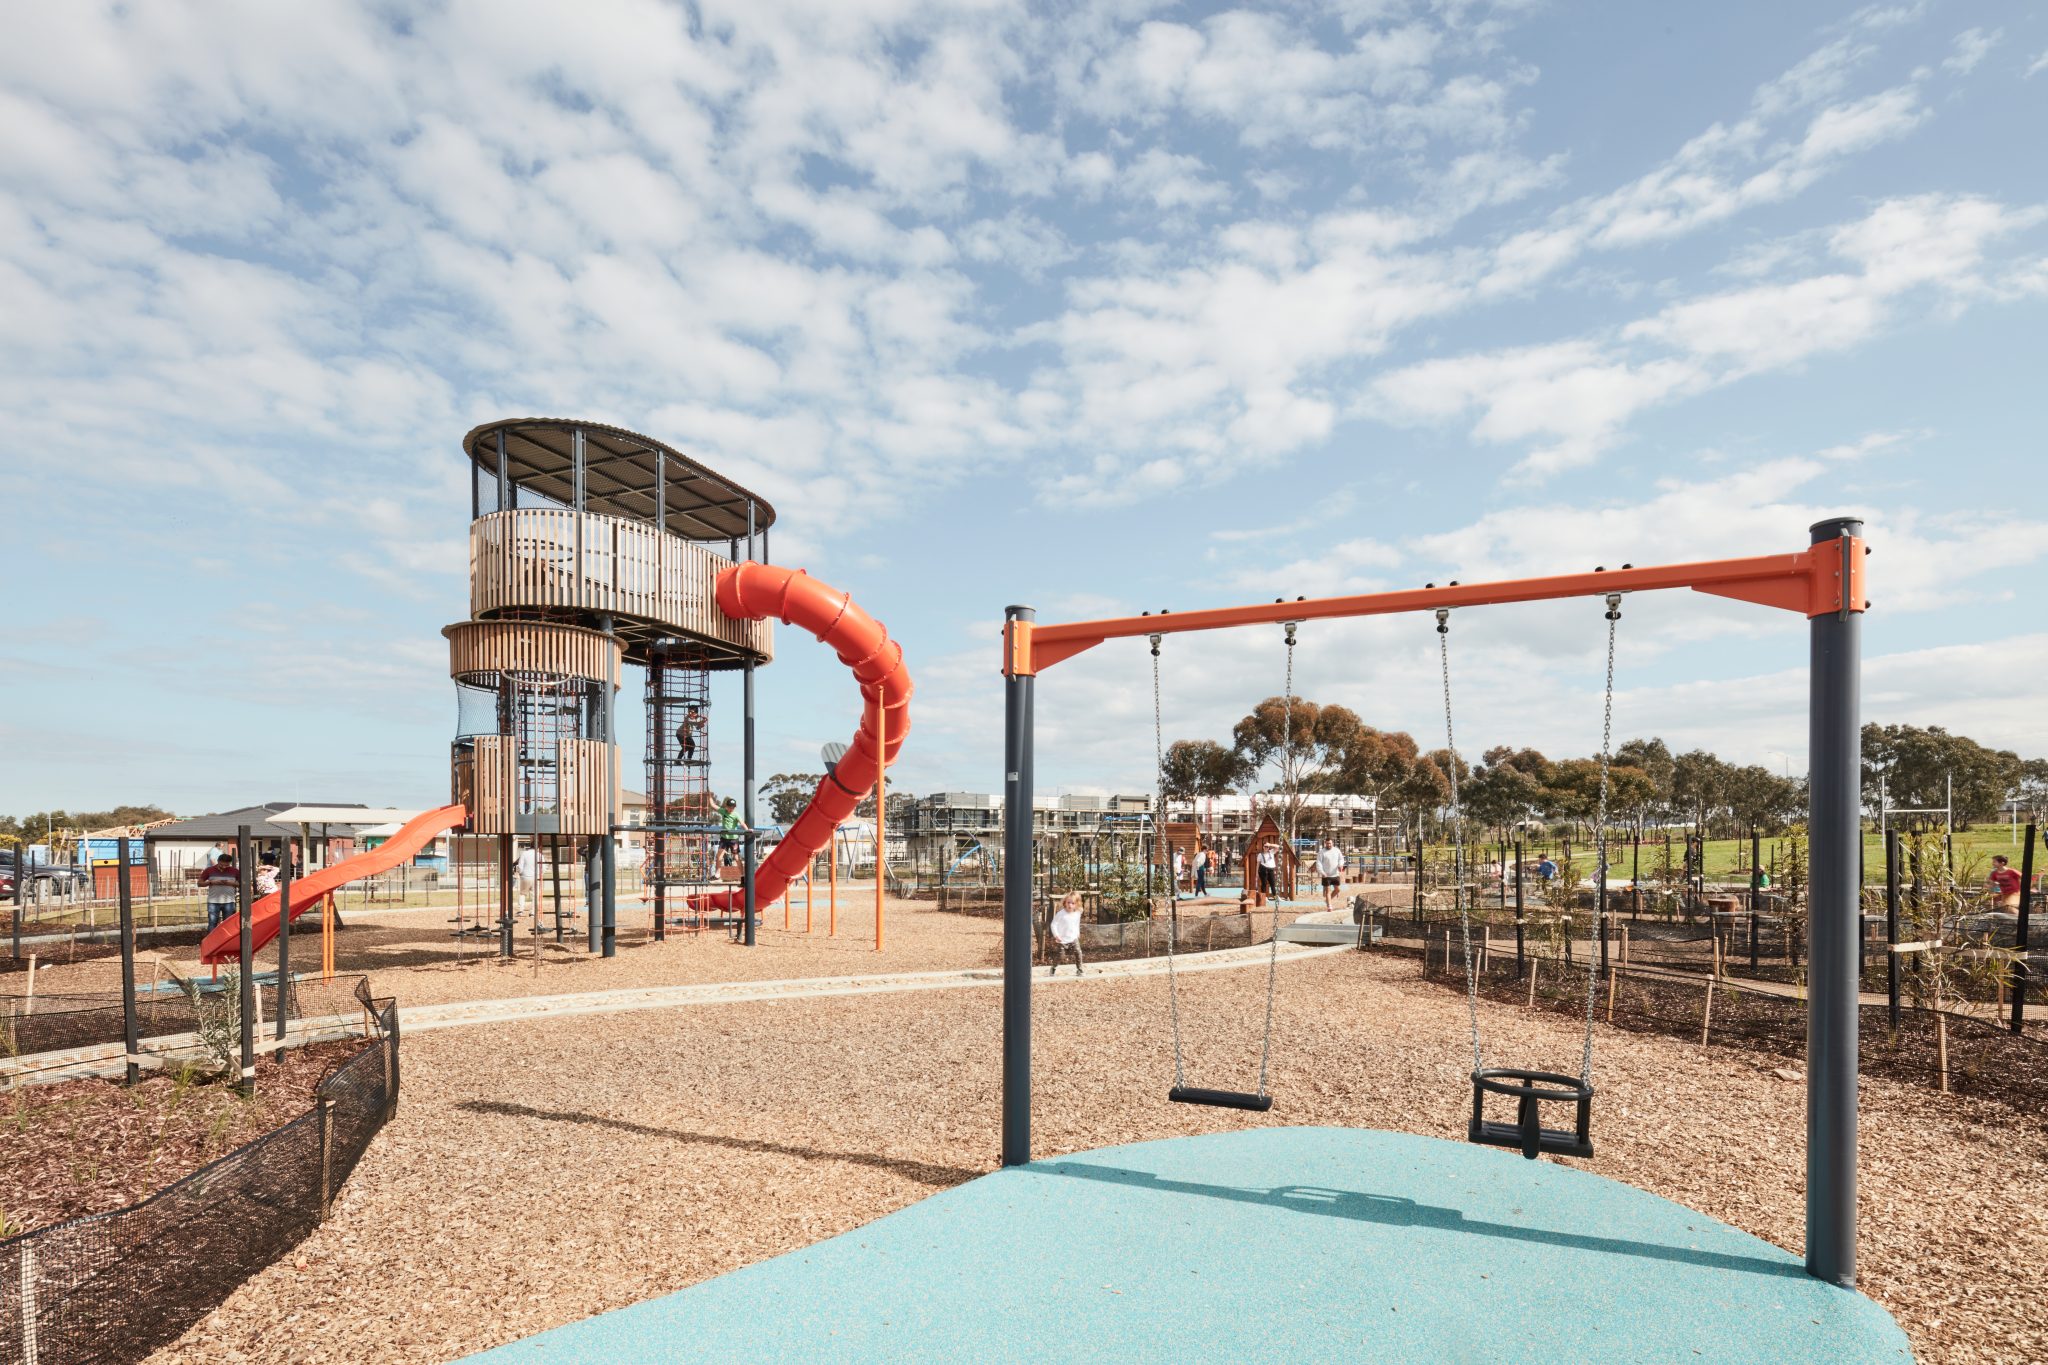 Photo of the playground at Glenlee Regional Park